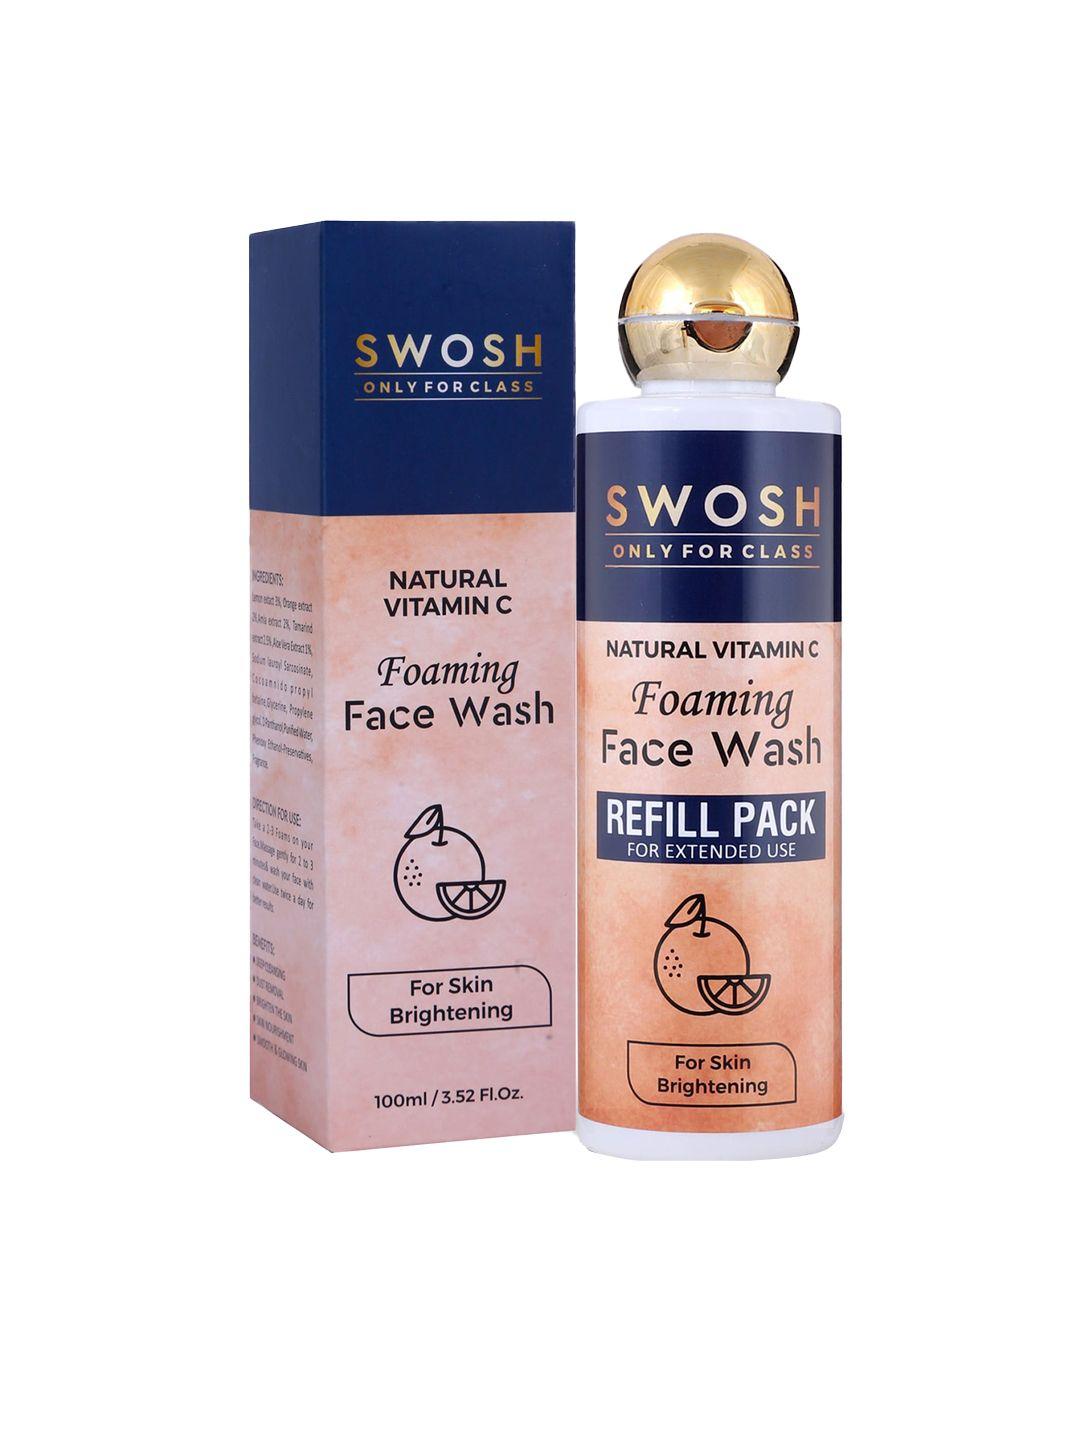 swosh natural vitamin c foaming face wash refill pack for skin brightening - 200 ml